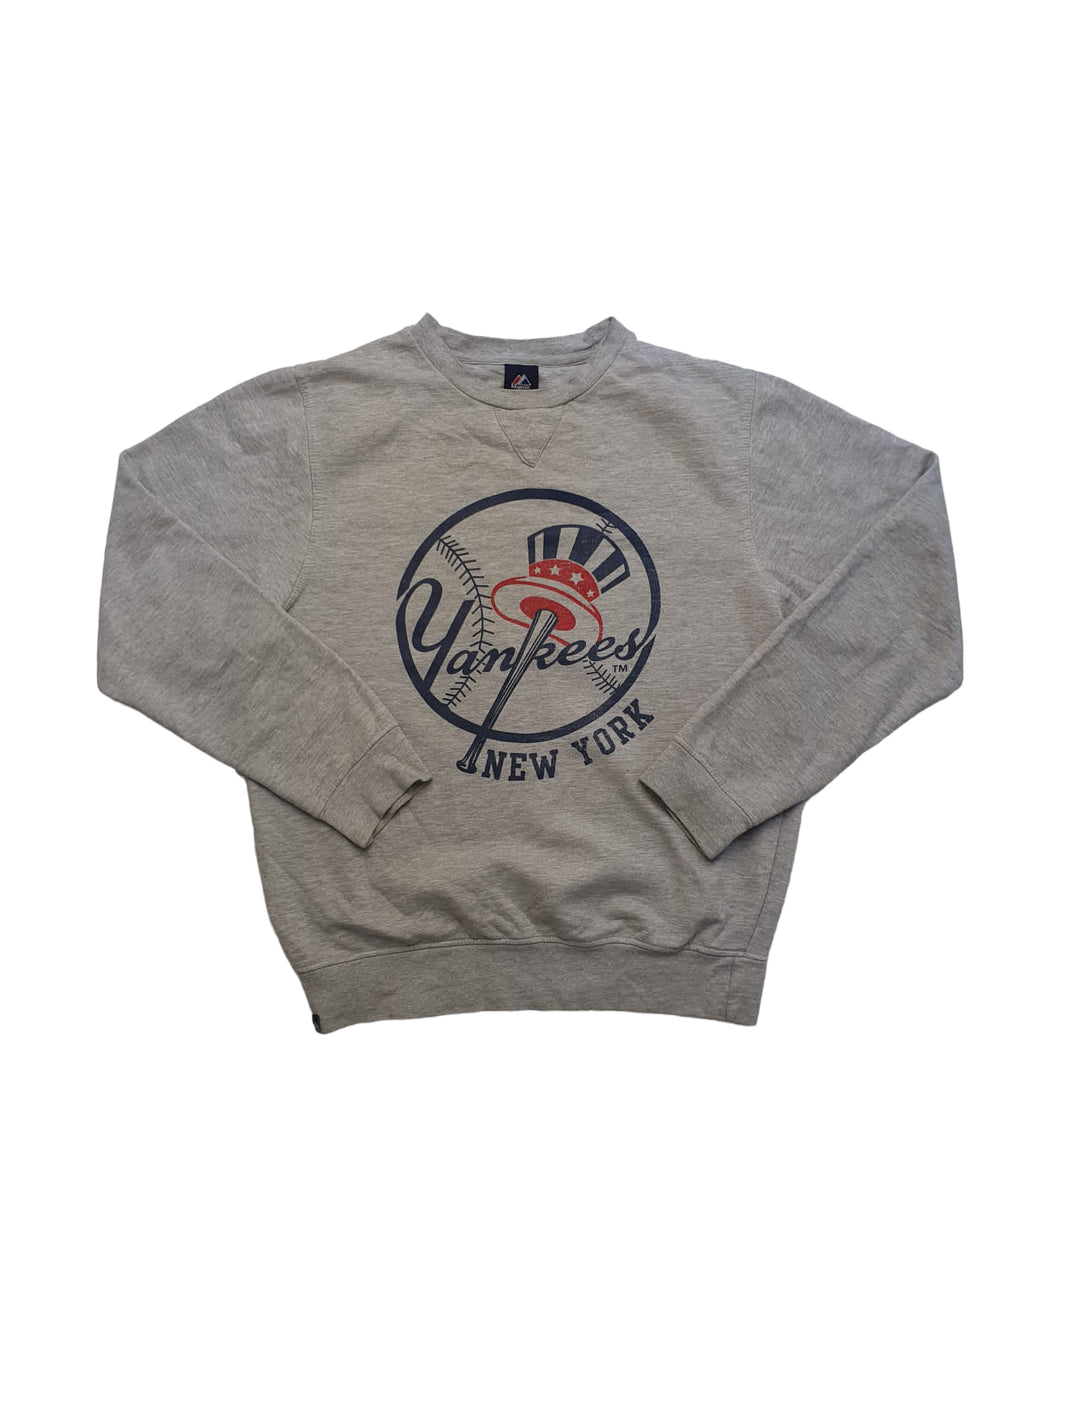 New York Yankees Sweater – Vintage Schuppen